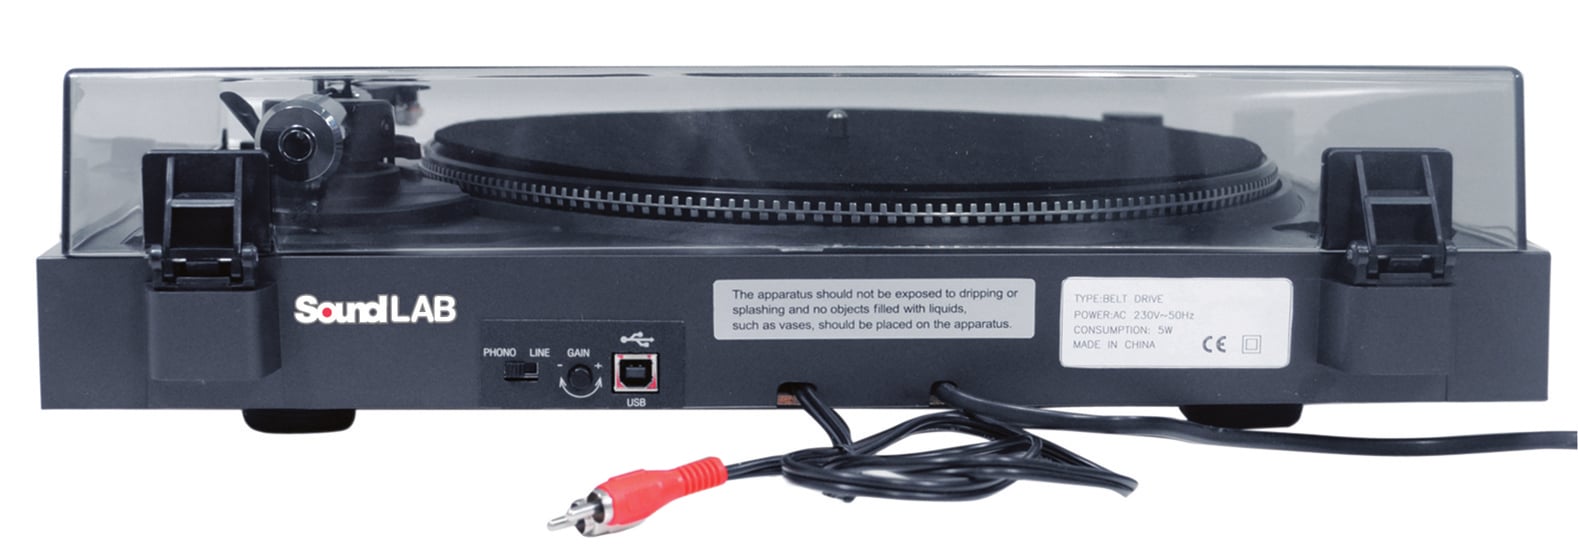 Soundlab Pro USB Belt Drive Turntable